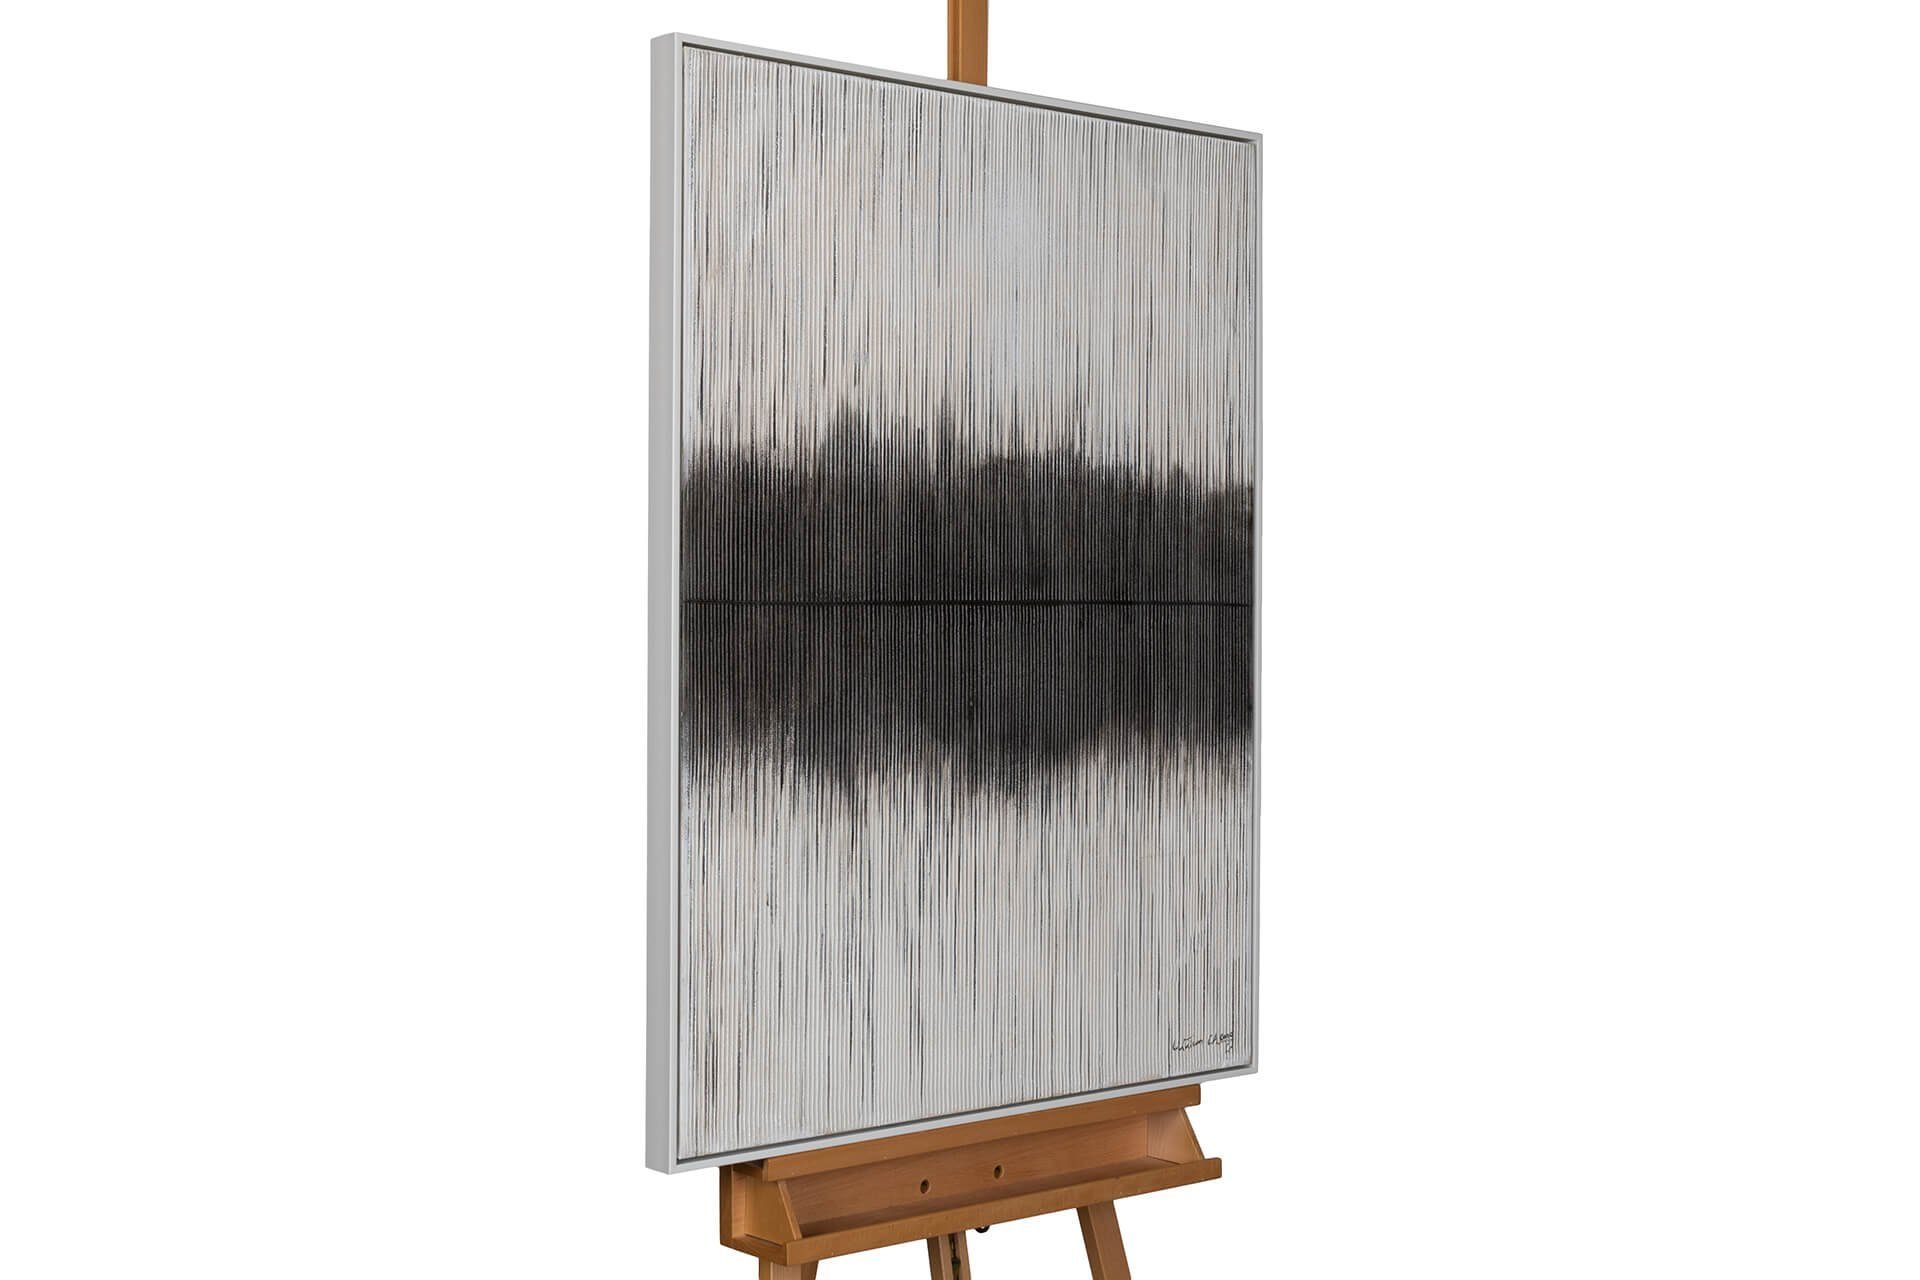 KUNSTLOFT Gemälde Cloudsplash 75x100 cm, Leinwandbild 100% HANDGEMALT Wandbild Wohnzimmer